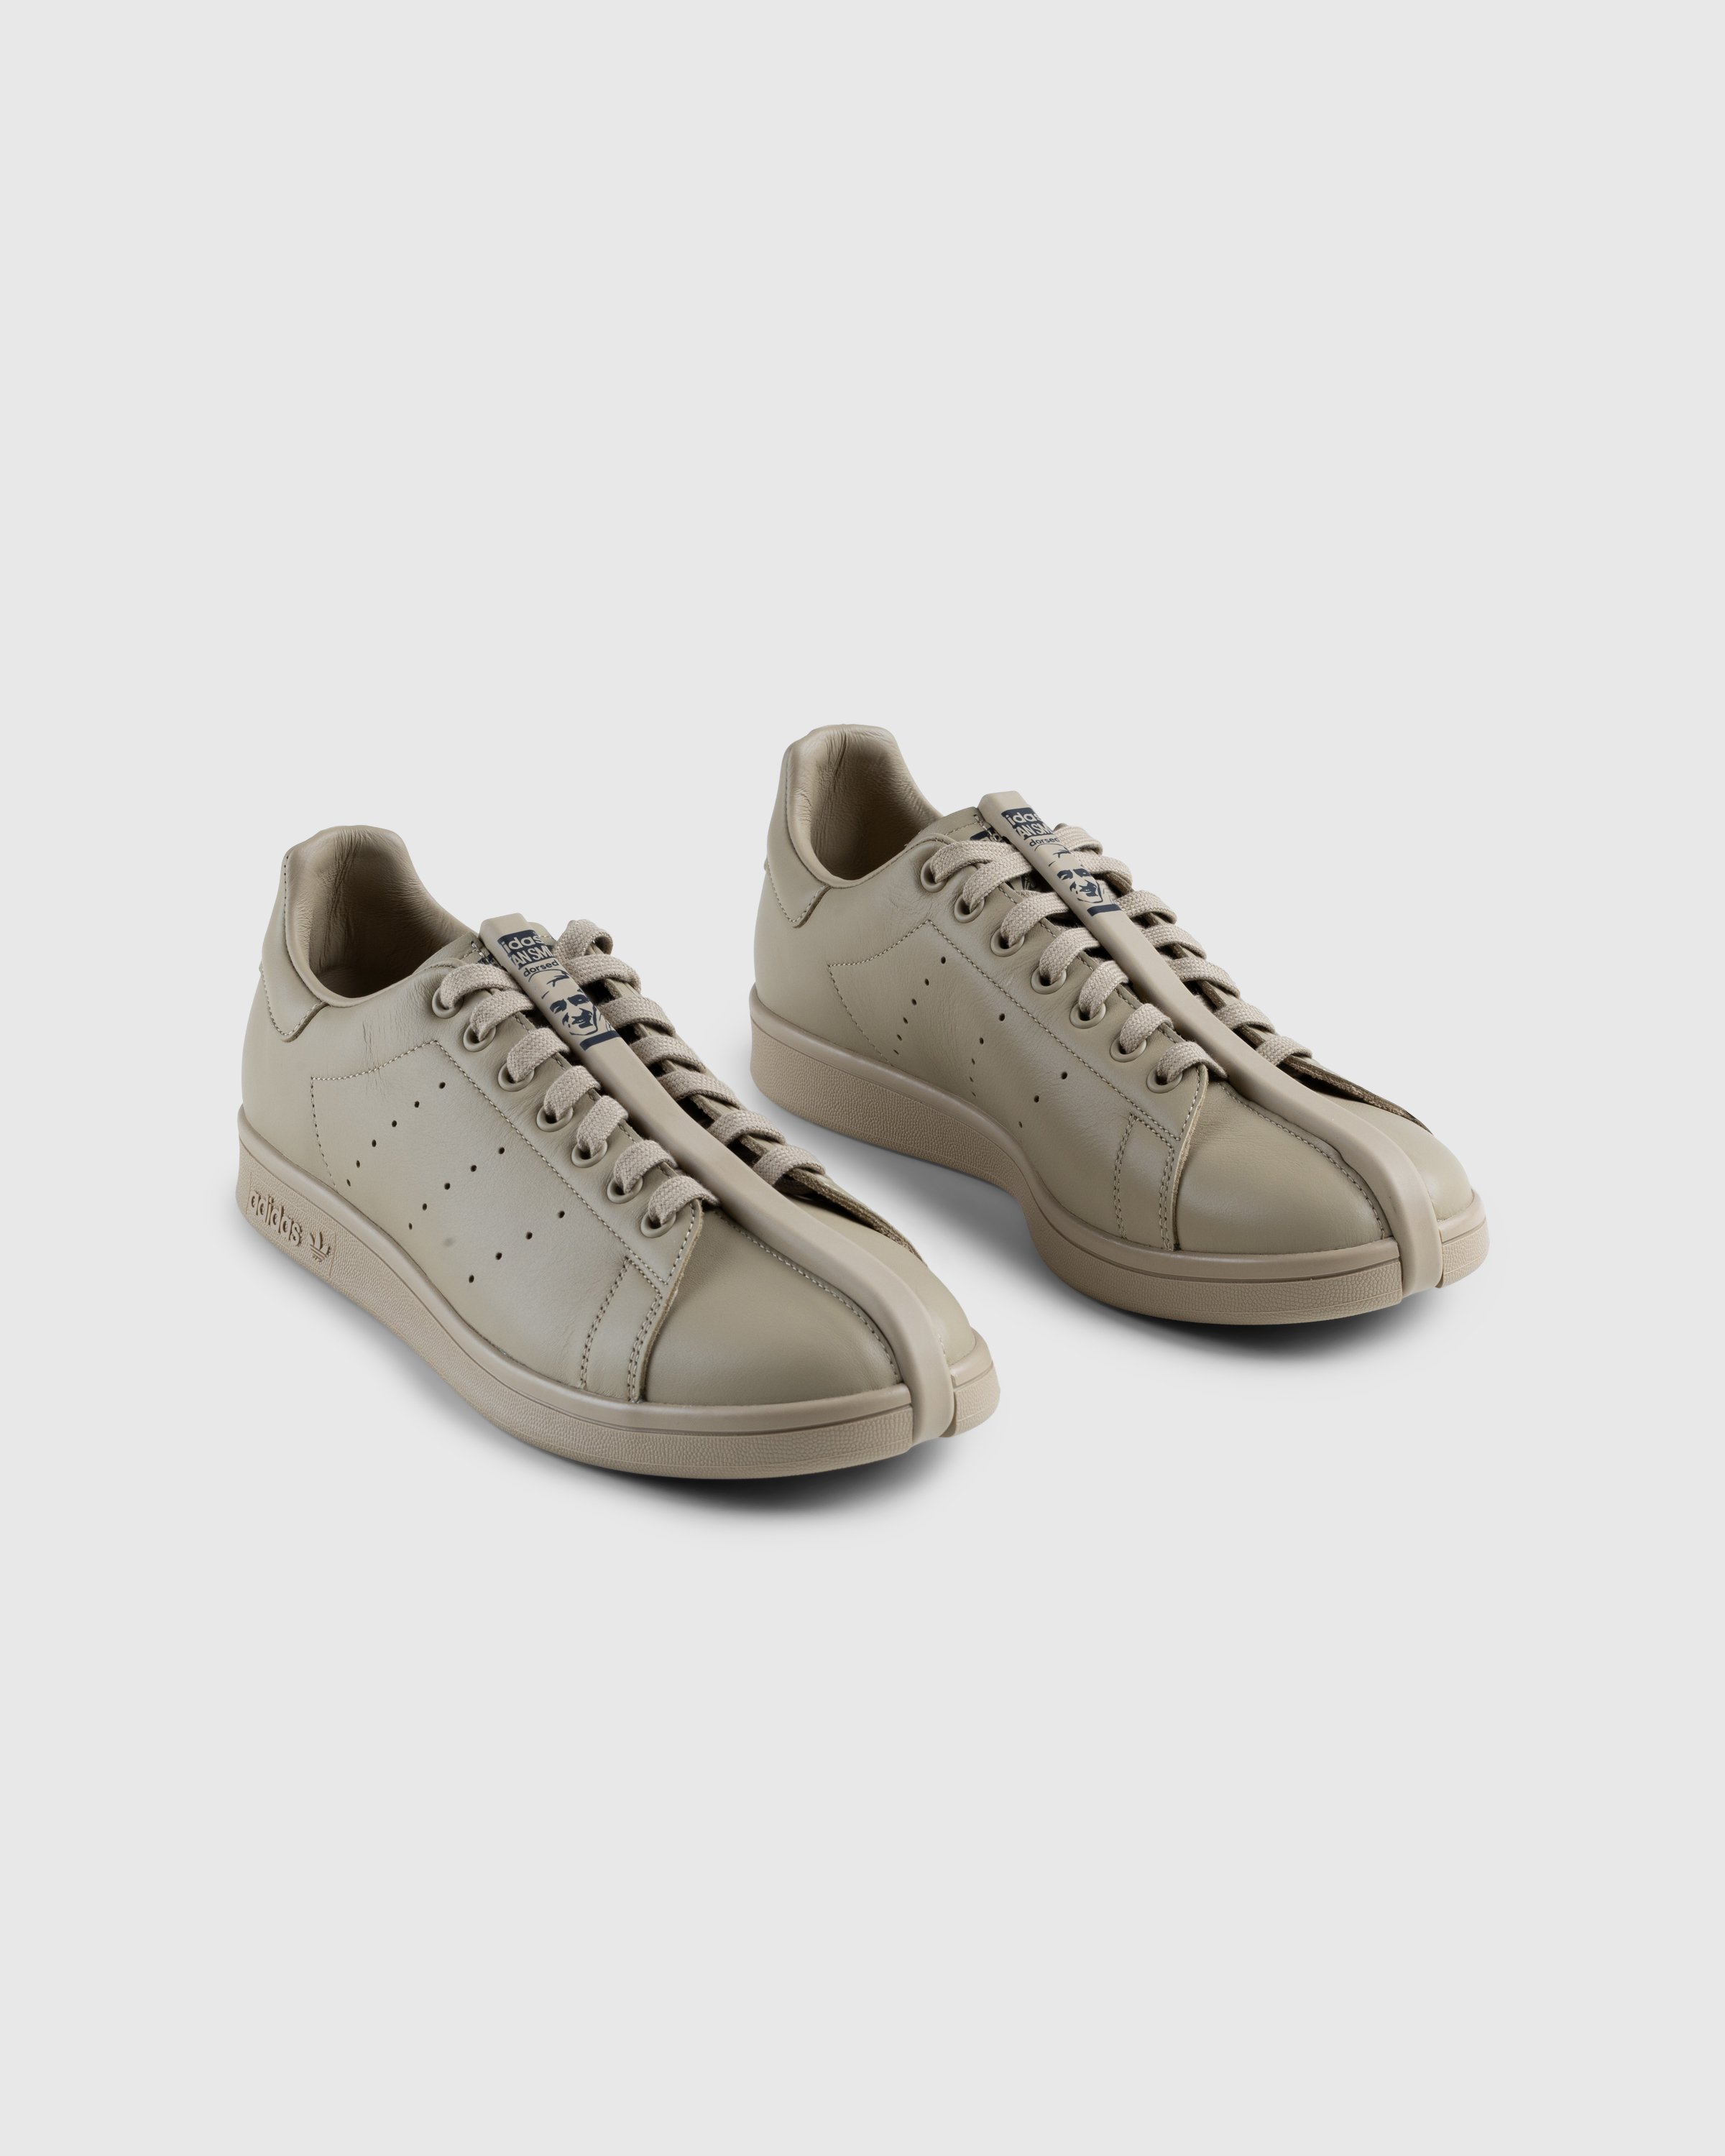 Craig Green x Adidas - CG Split Stan Smith beige tone/beige tone/core black - Footwear - Beige - Image 3